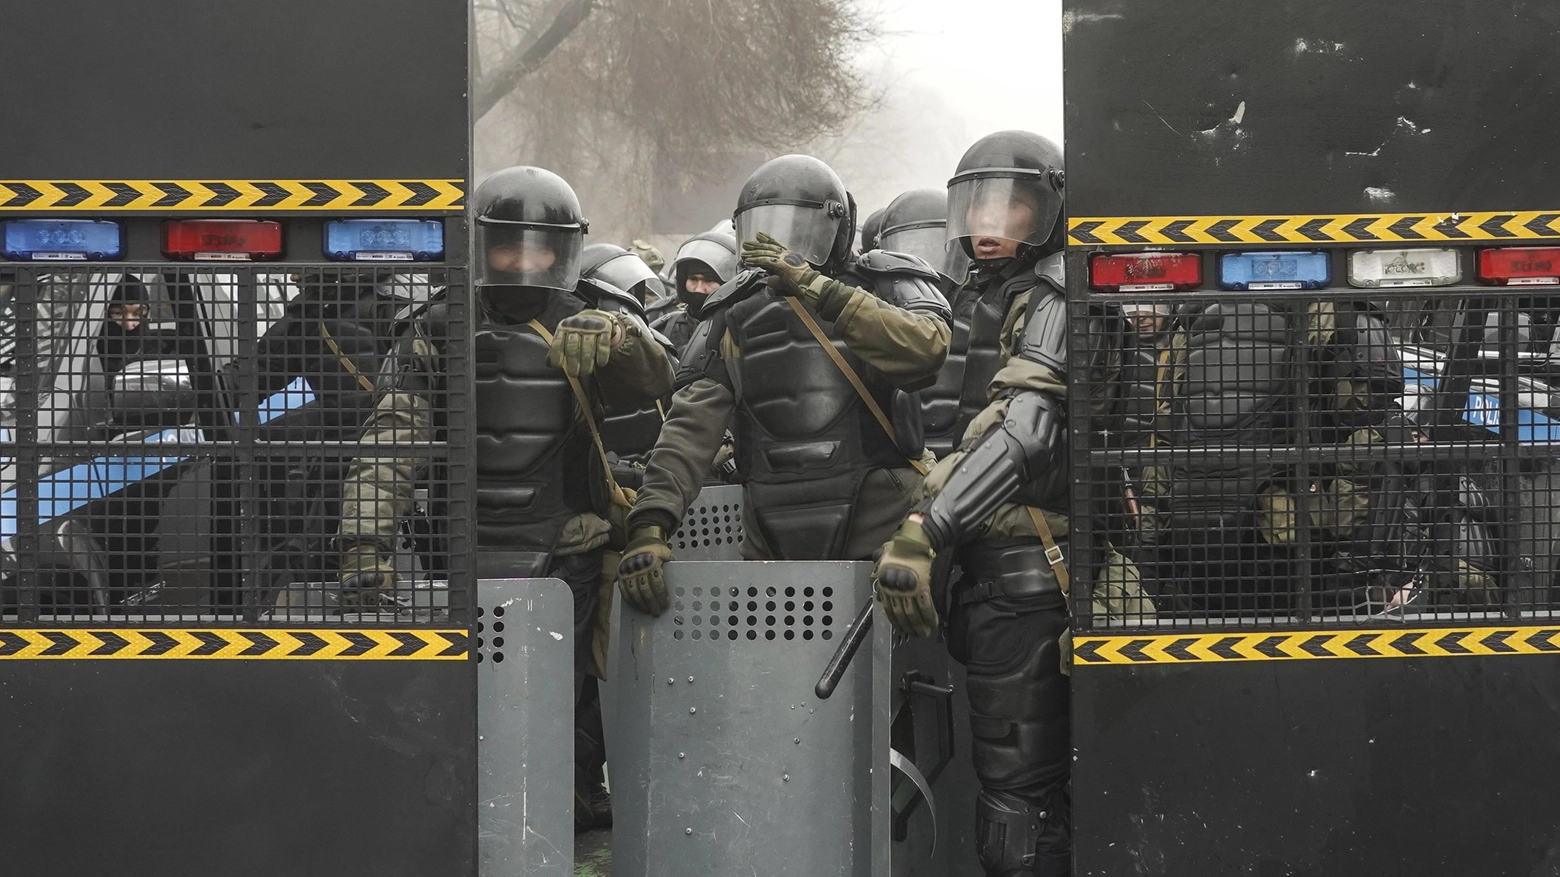 Kazakistan, oltre 5mila le persone arrestate